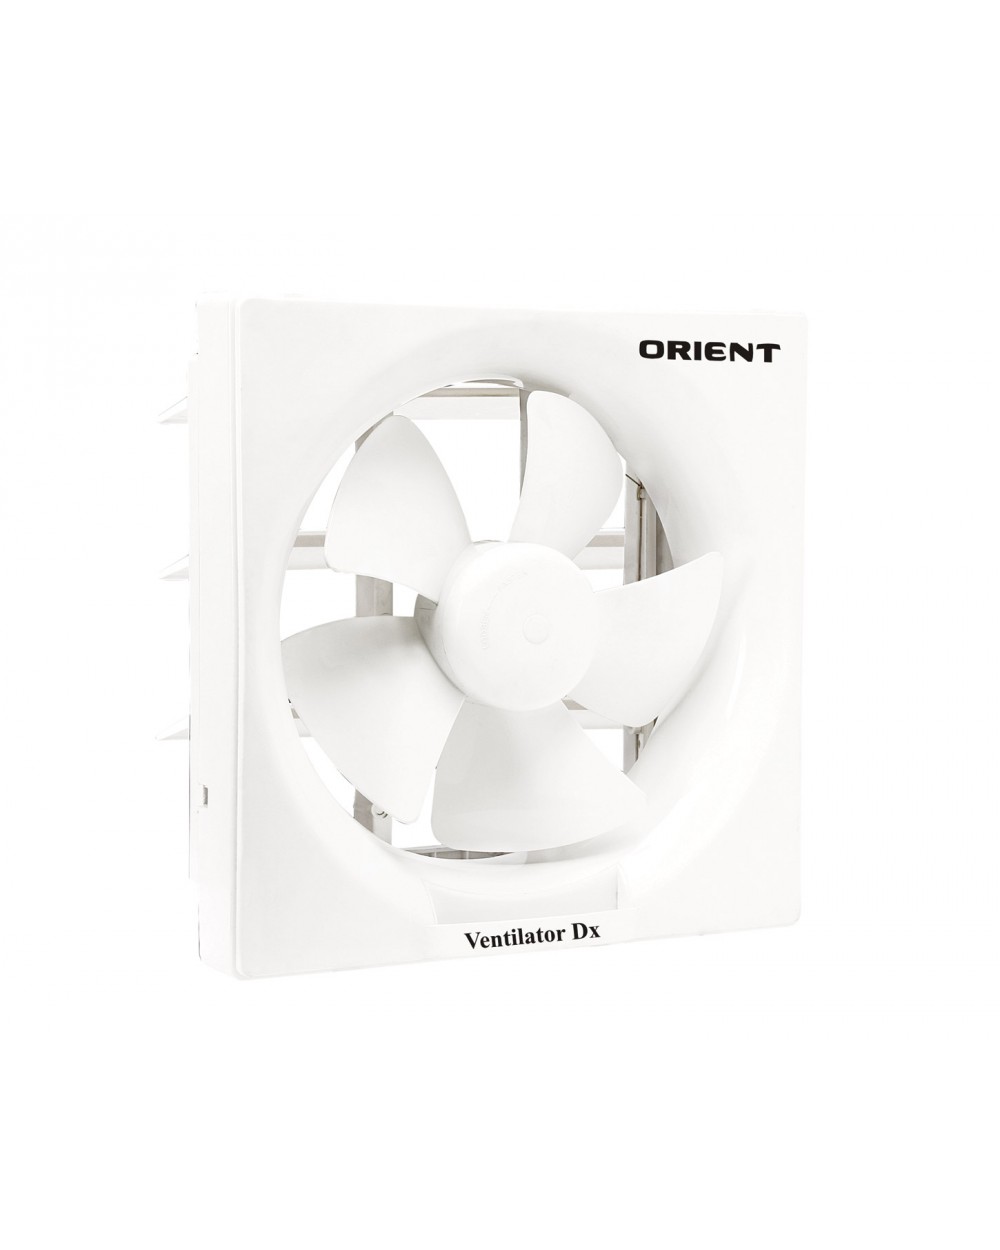 orient exhaust fan 6 inch price        <h3 class=